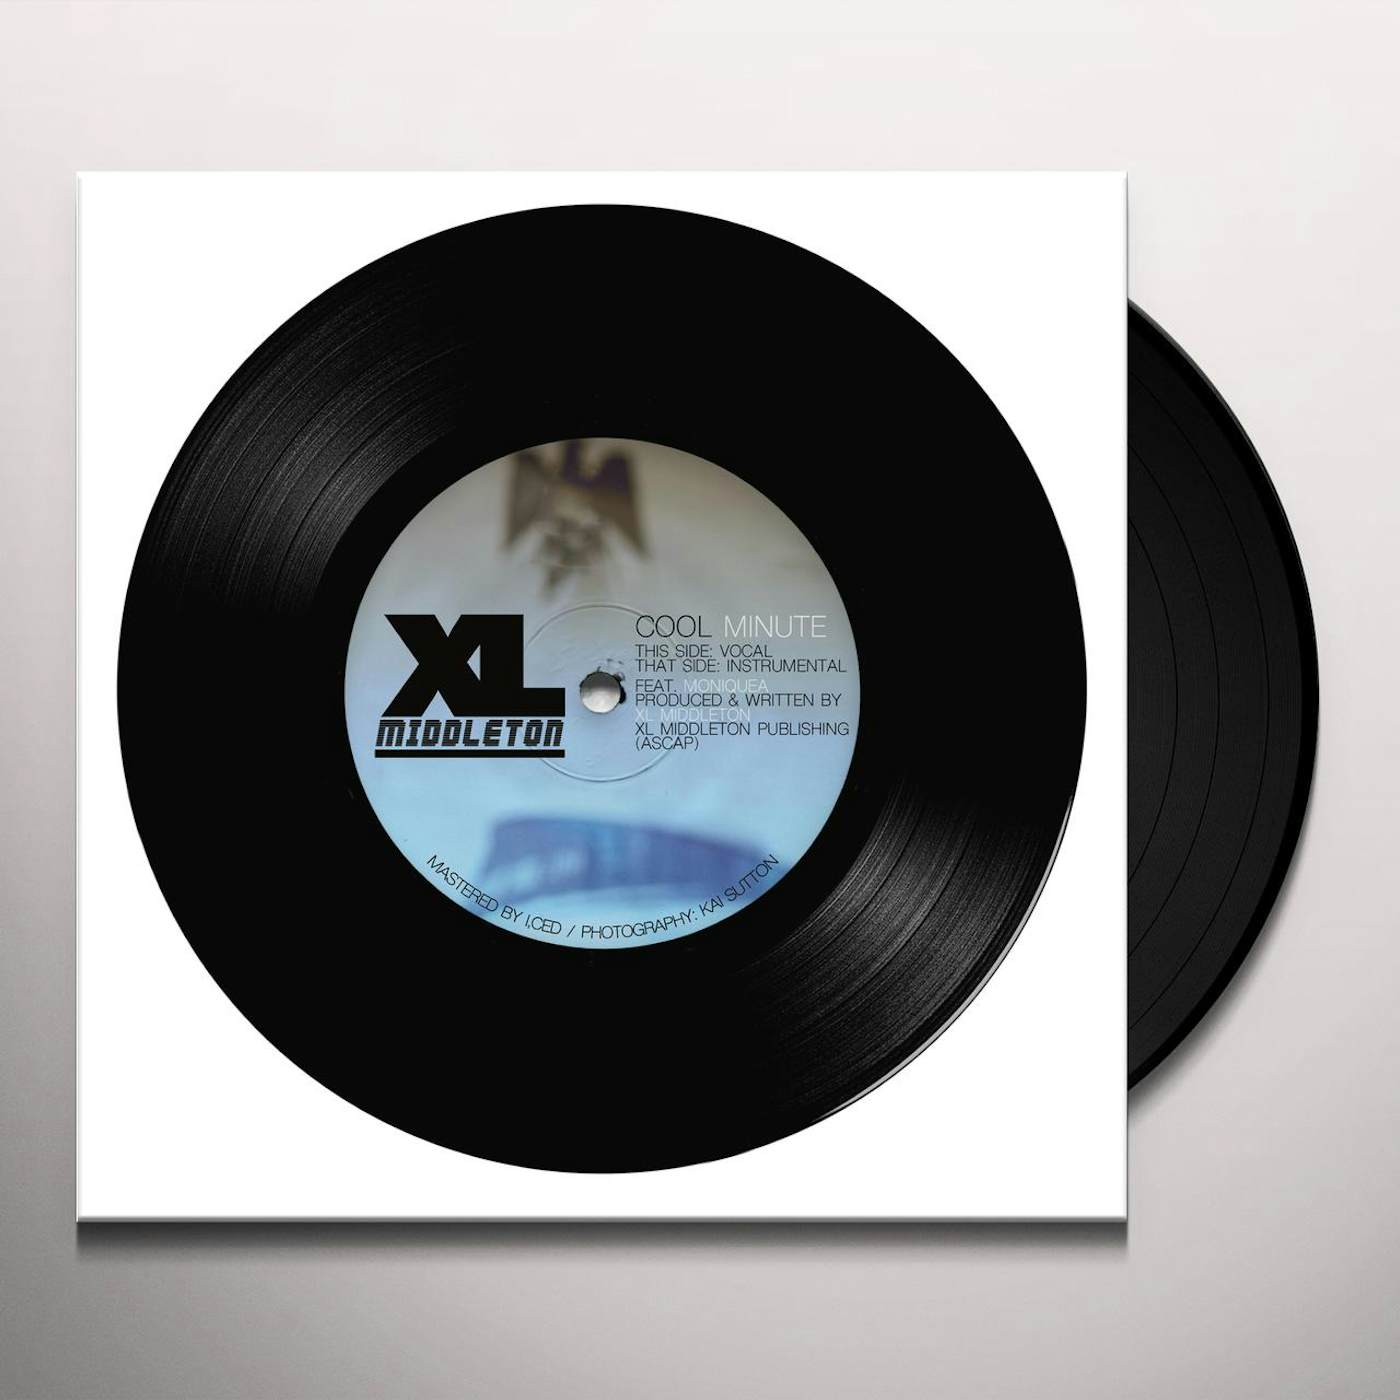 XL Middleton COOL MINUTE / INSTRUMENTAL Vinyl Record